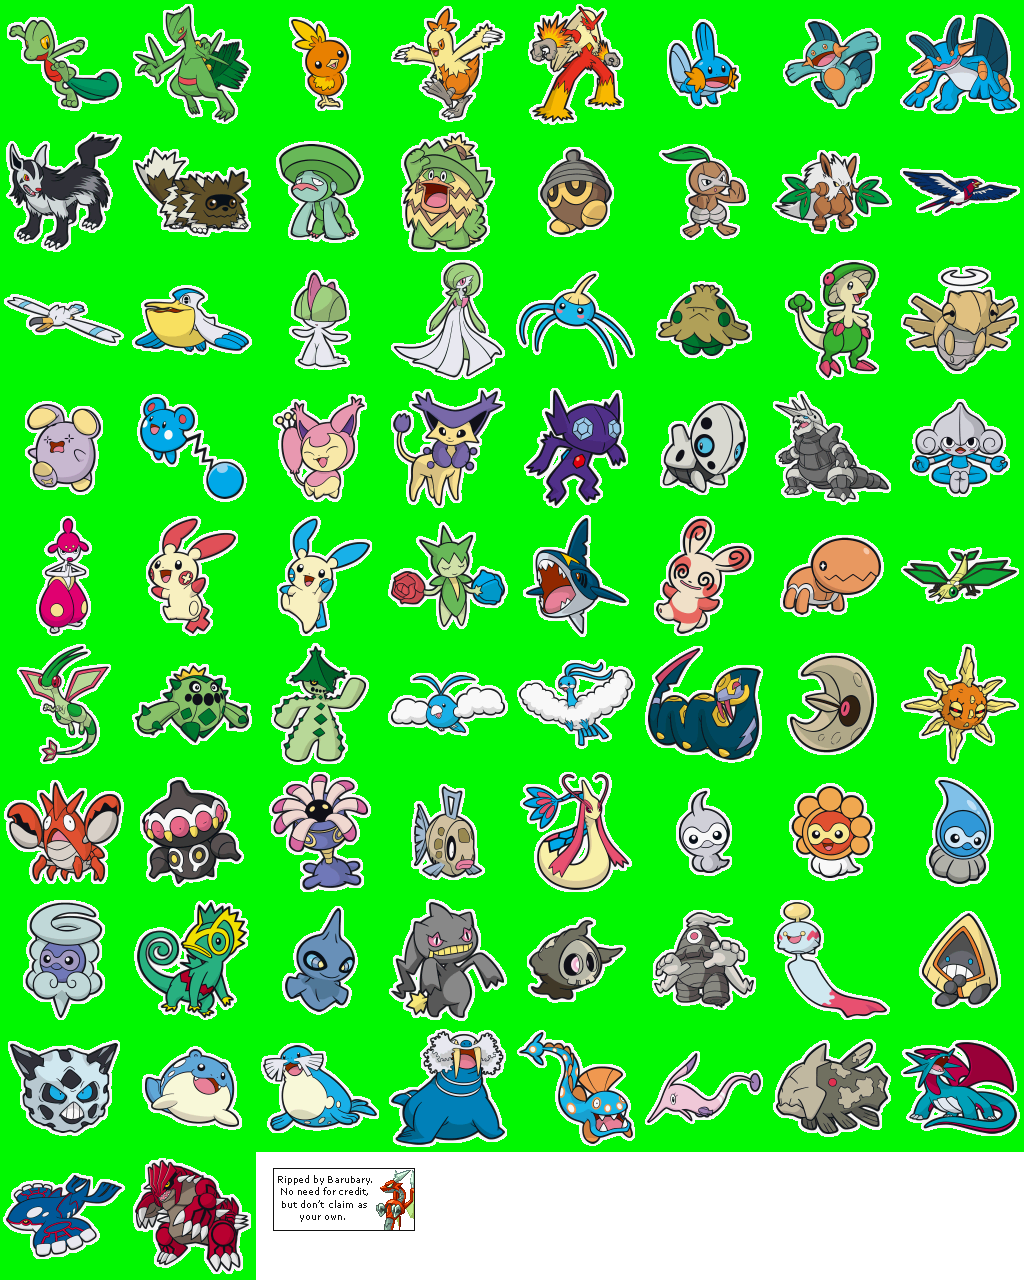 Learn with Pokémon: Typing Adventure - Pokémon Stickers (3rd Generation)